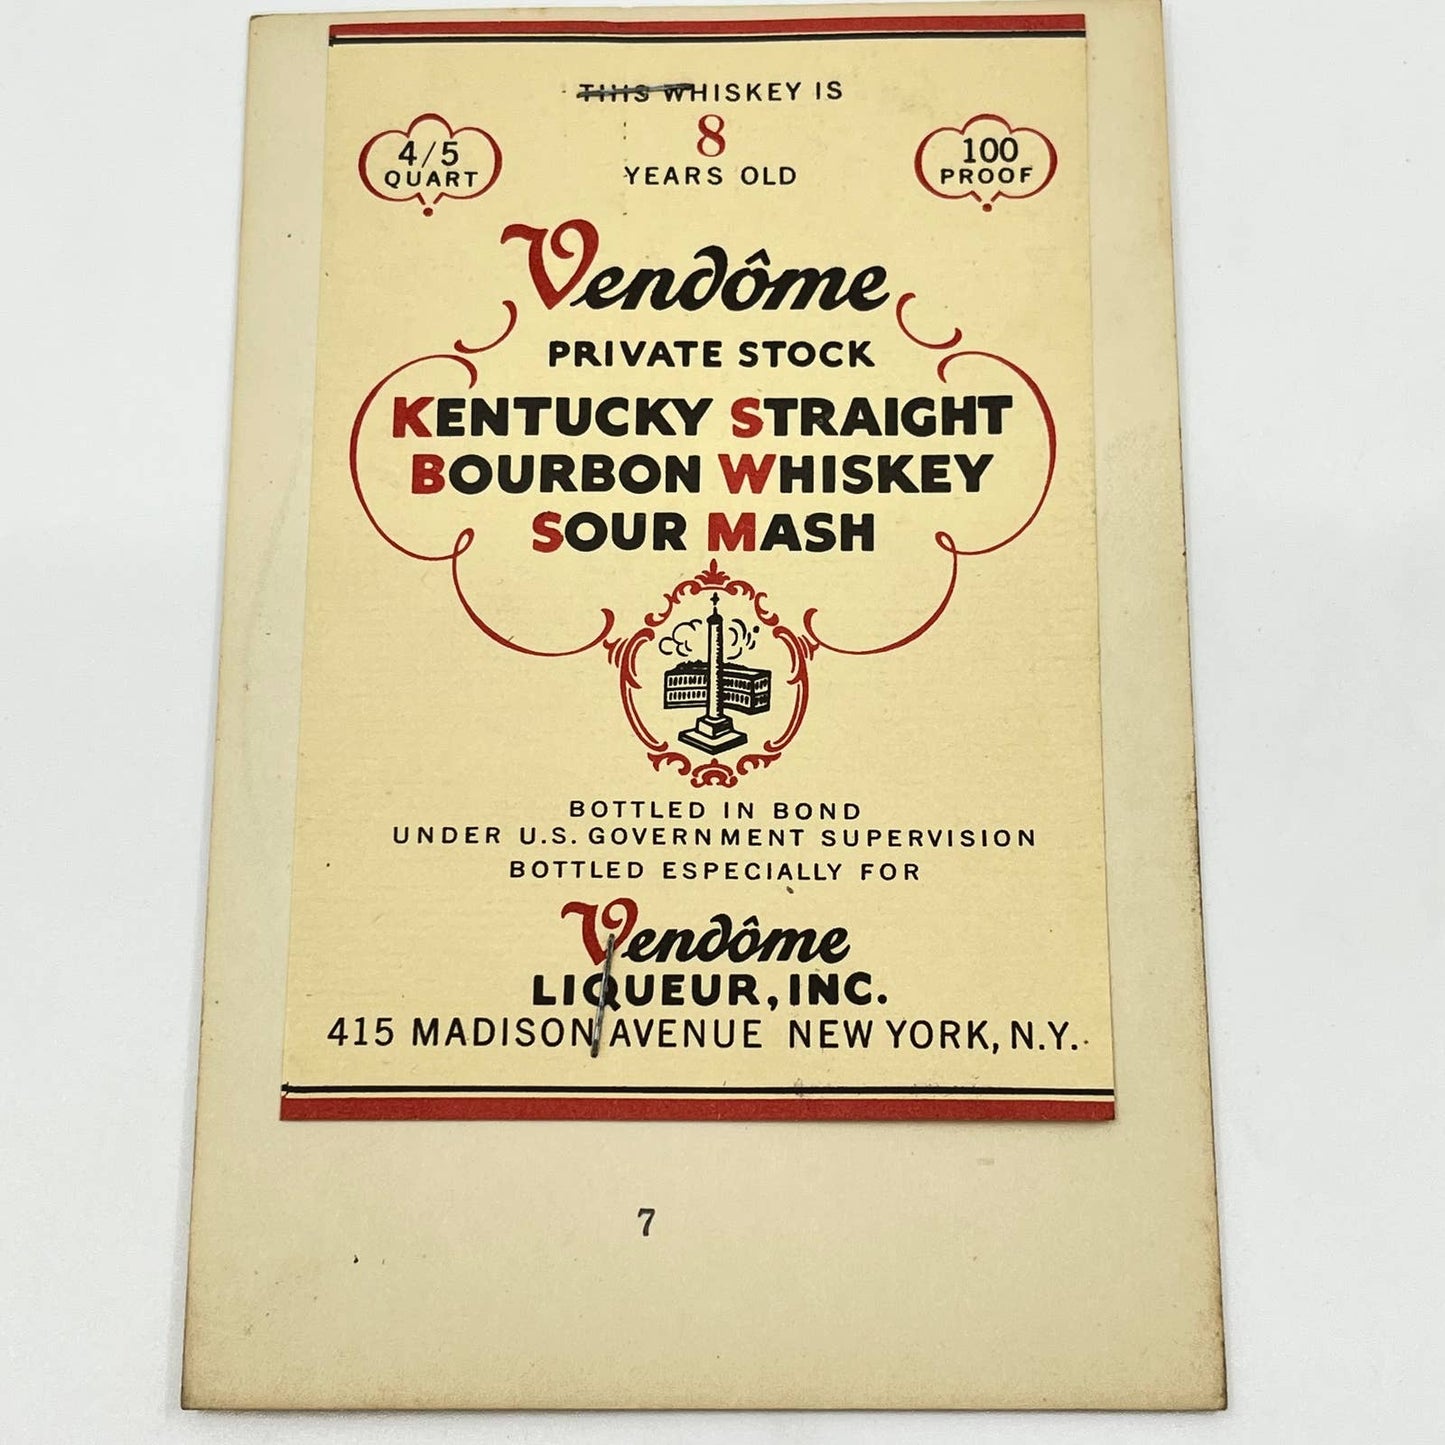 White Bear Vodka Label Set of 4 Kentucky Distilling Co. Bardstown